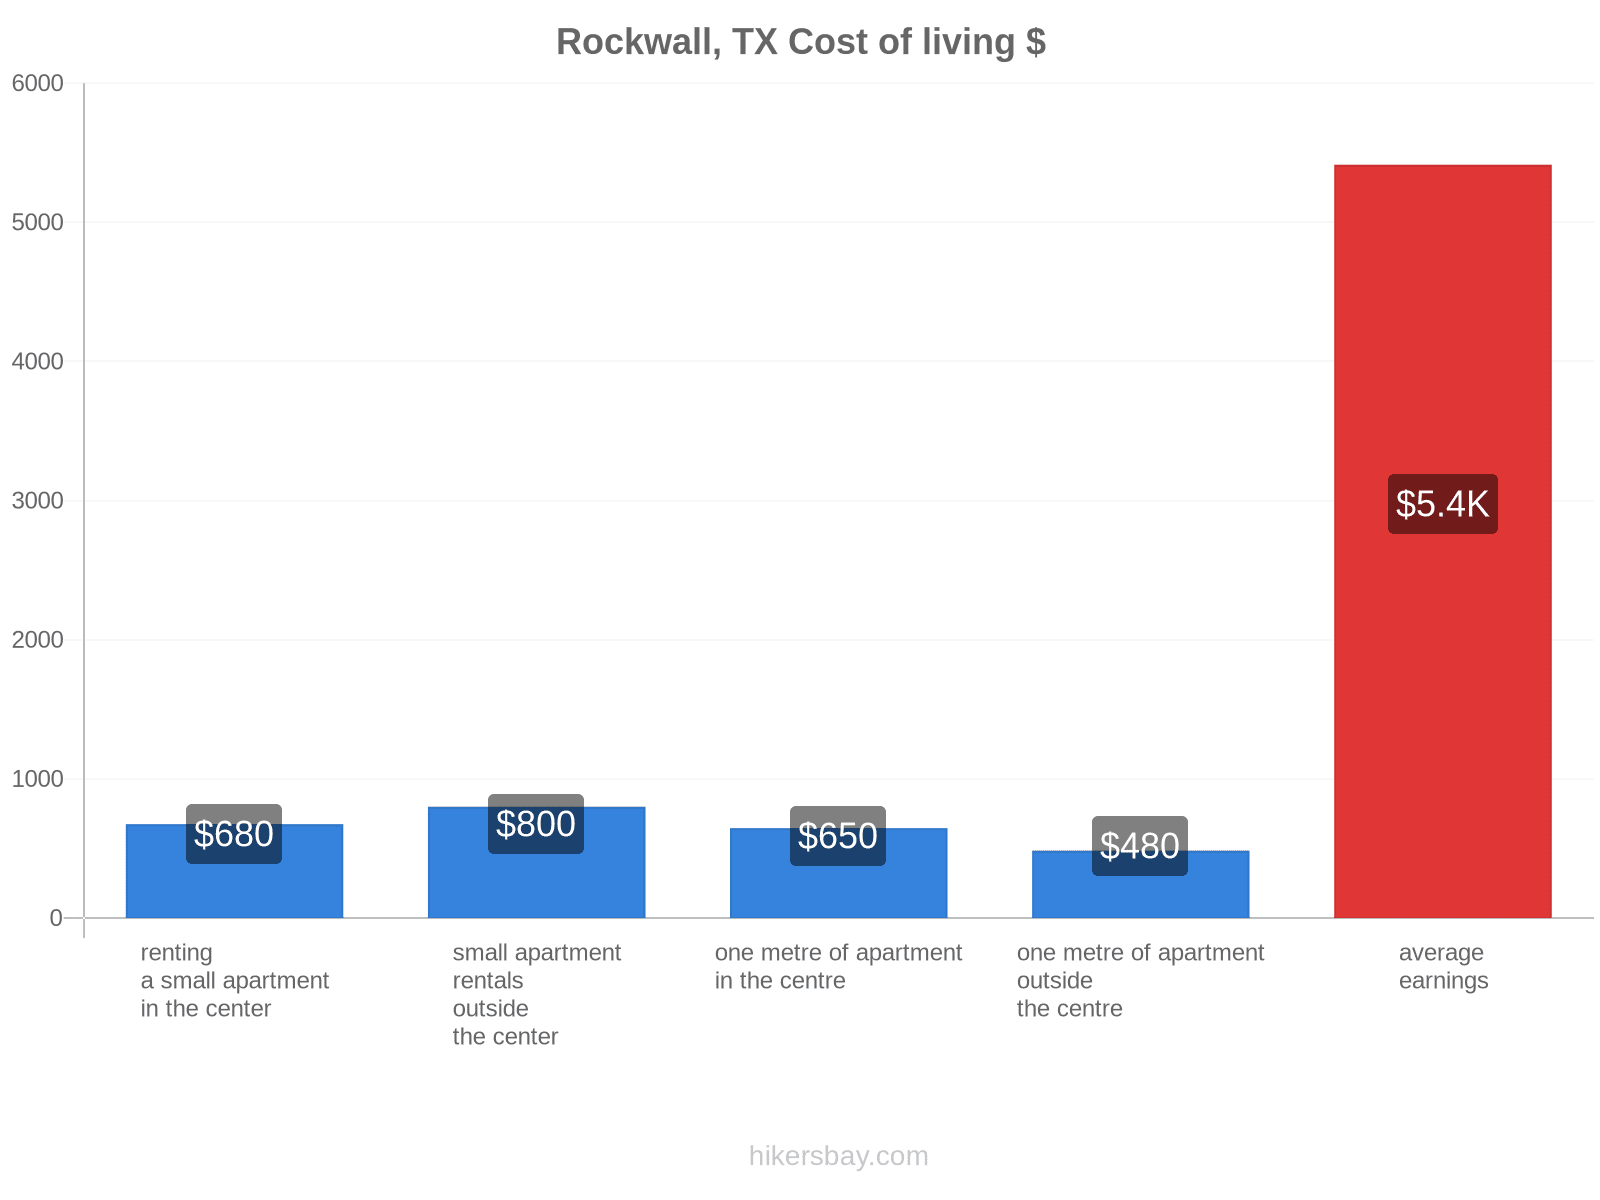 Rockwall, TX cost of living hikersbay.com